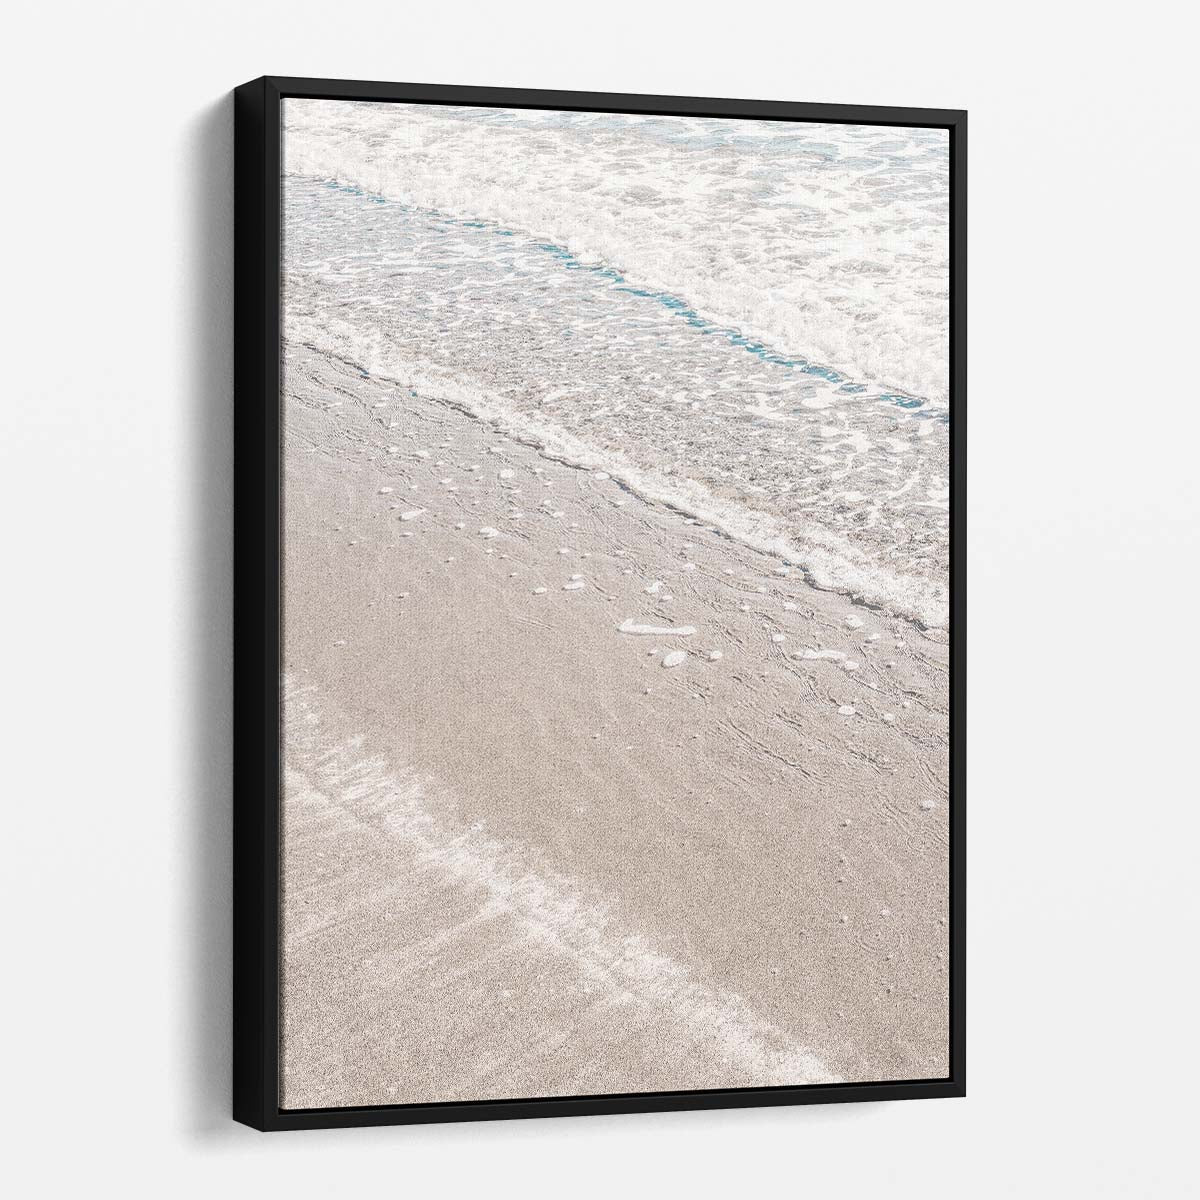 Coastal Beach Landscape Beige Sand, Ocean Wave Photography Art by Luxuriance Designs, made in USA